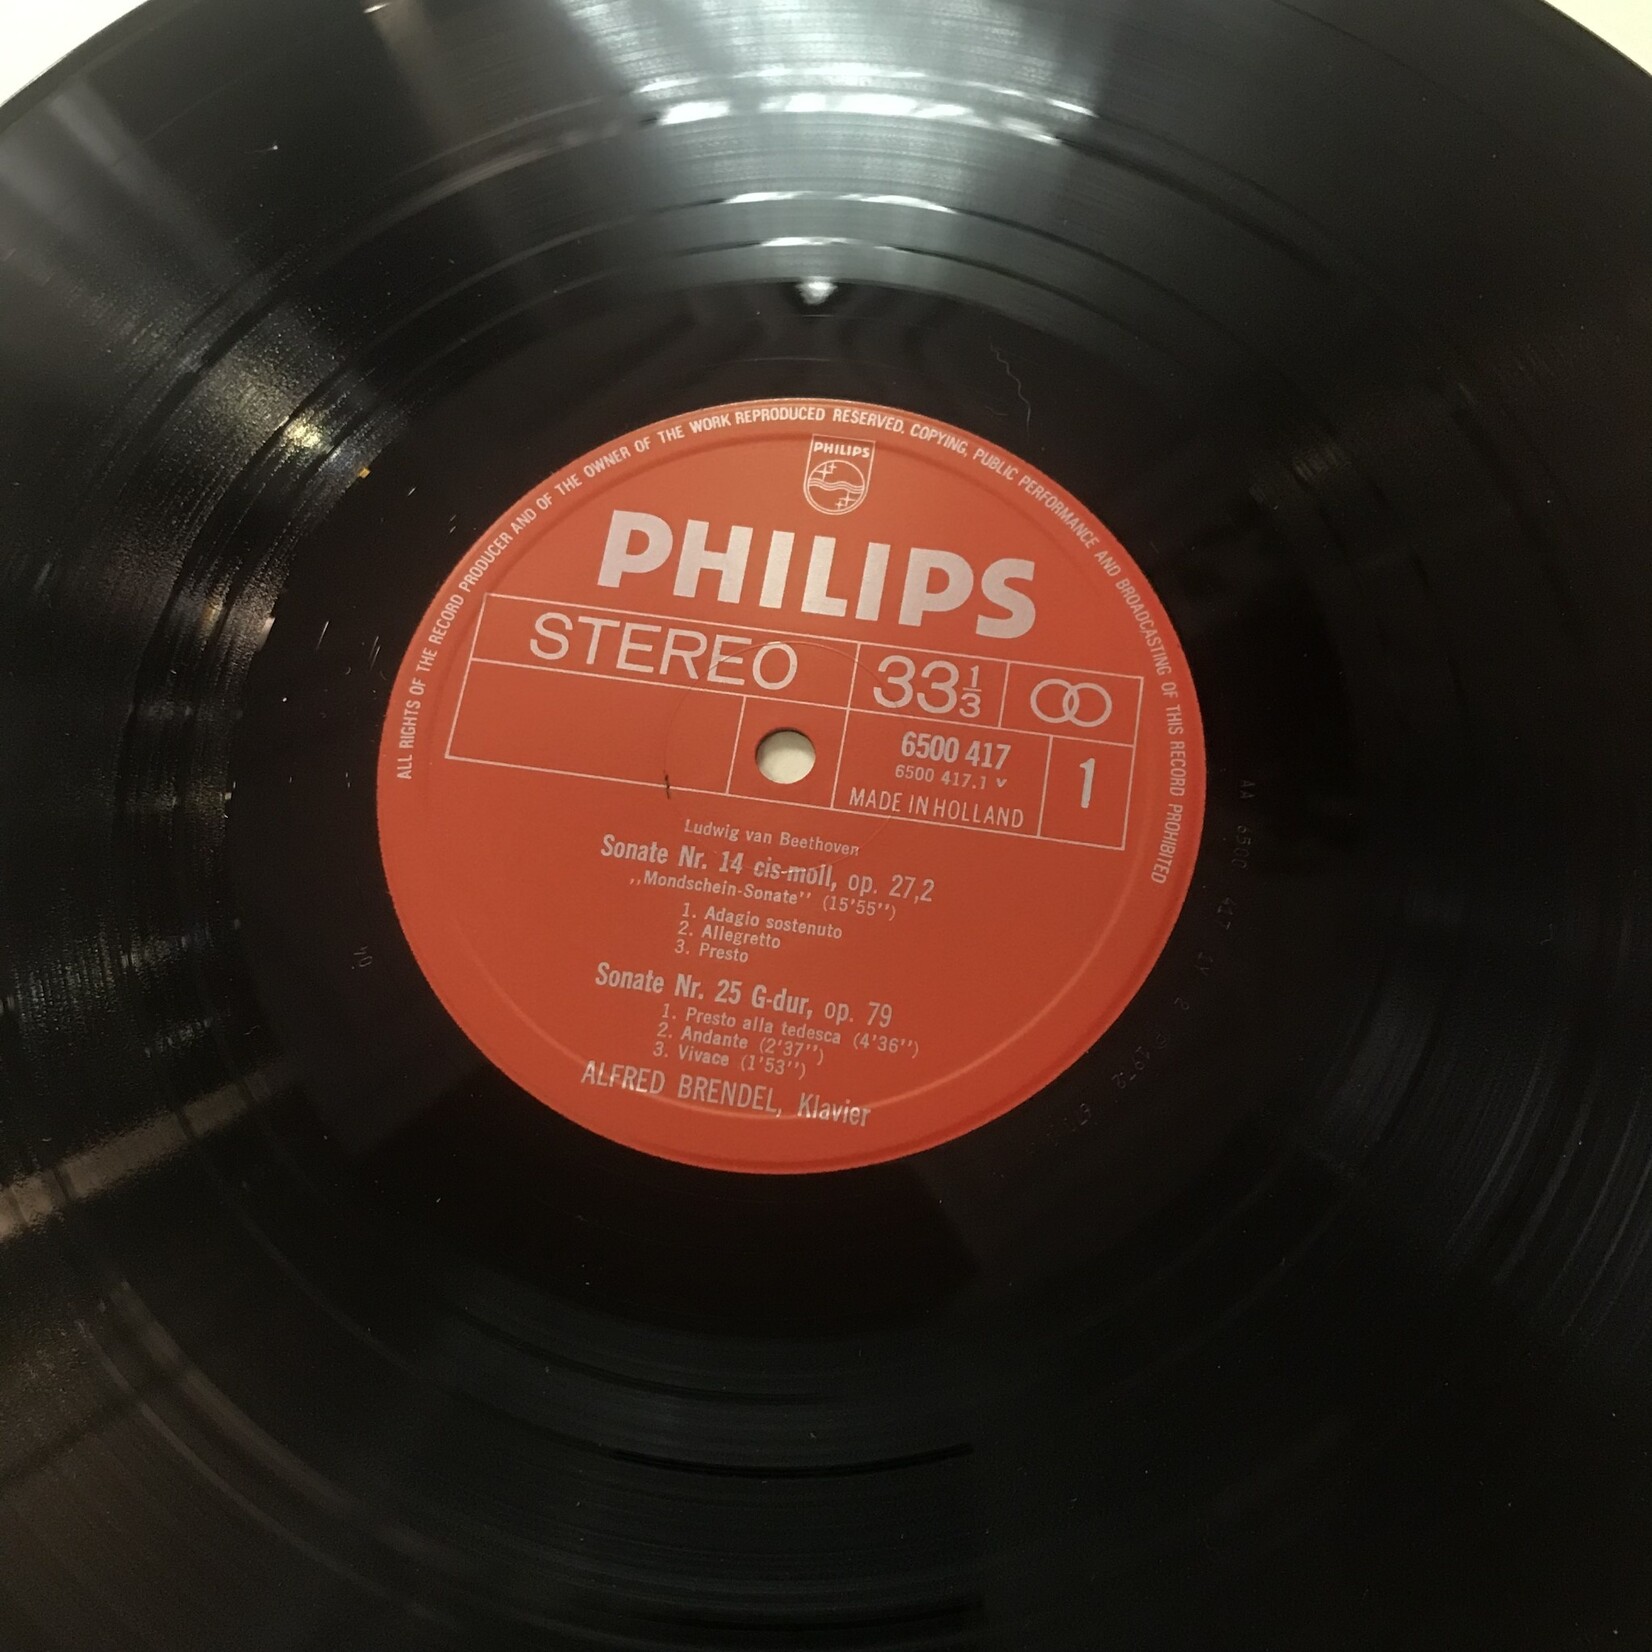 Alfred Brendel - Beethoven: “Moonlight” Sonata - 6500 417 - Vinyl LP (USED - NETHERLANDS)